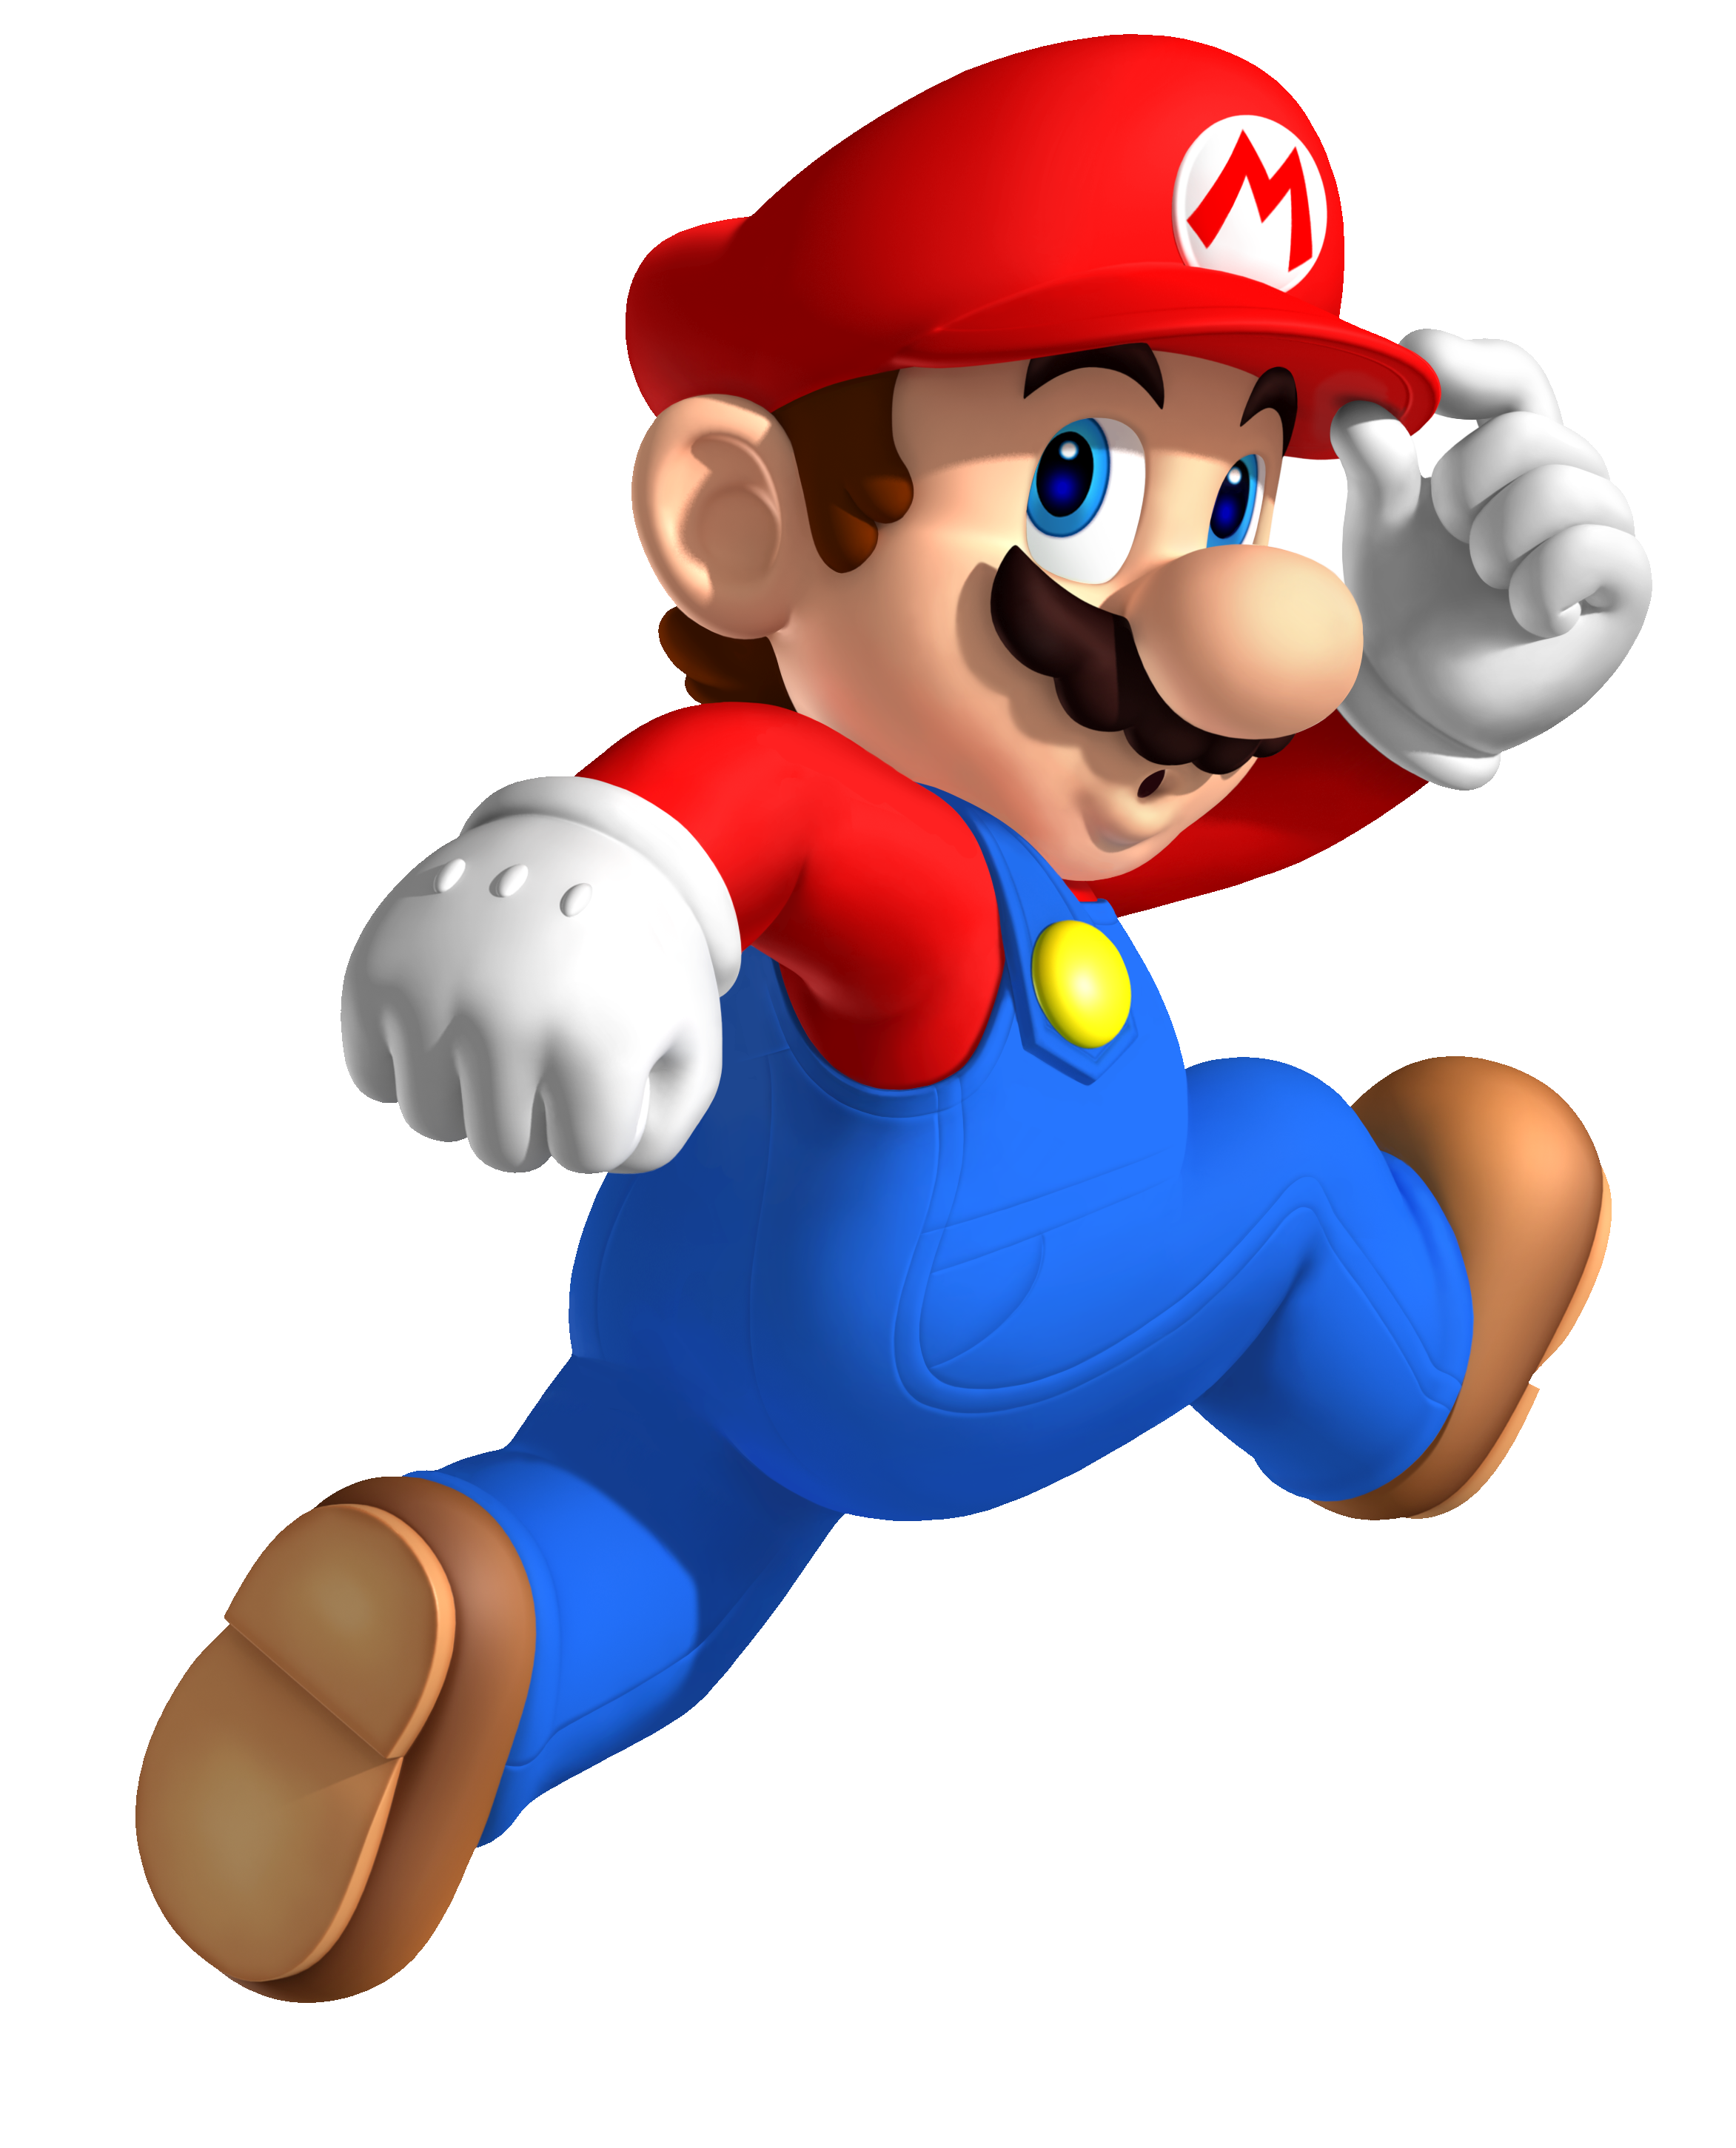 Mario Image PNG Image